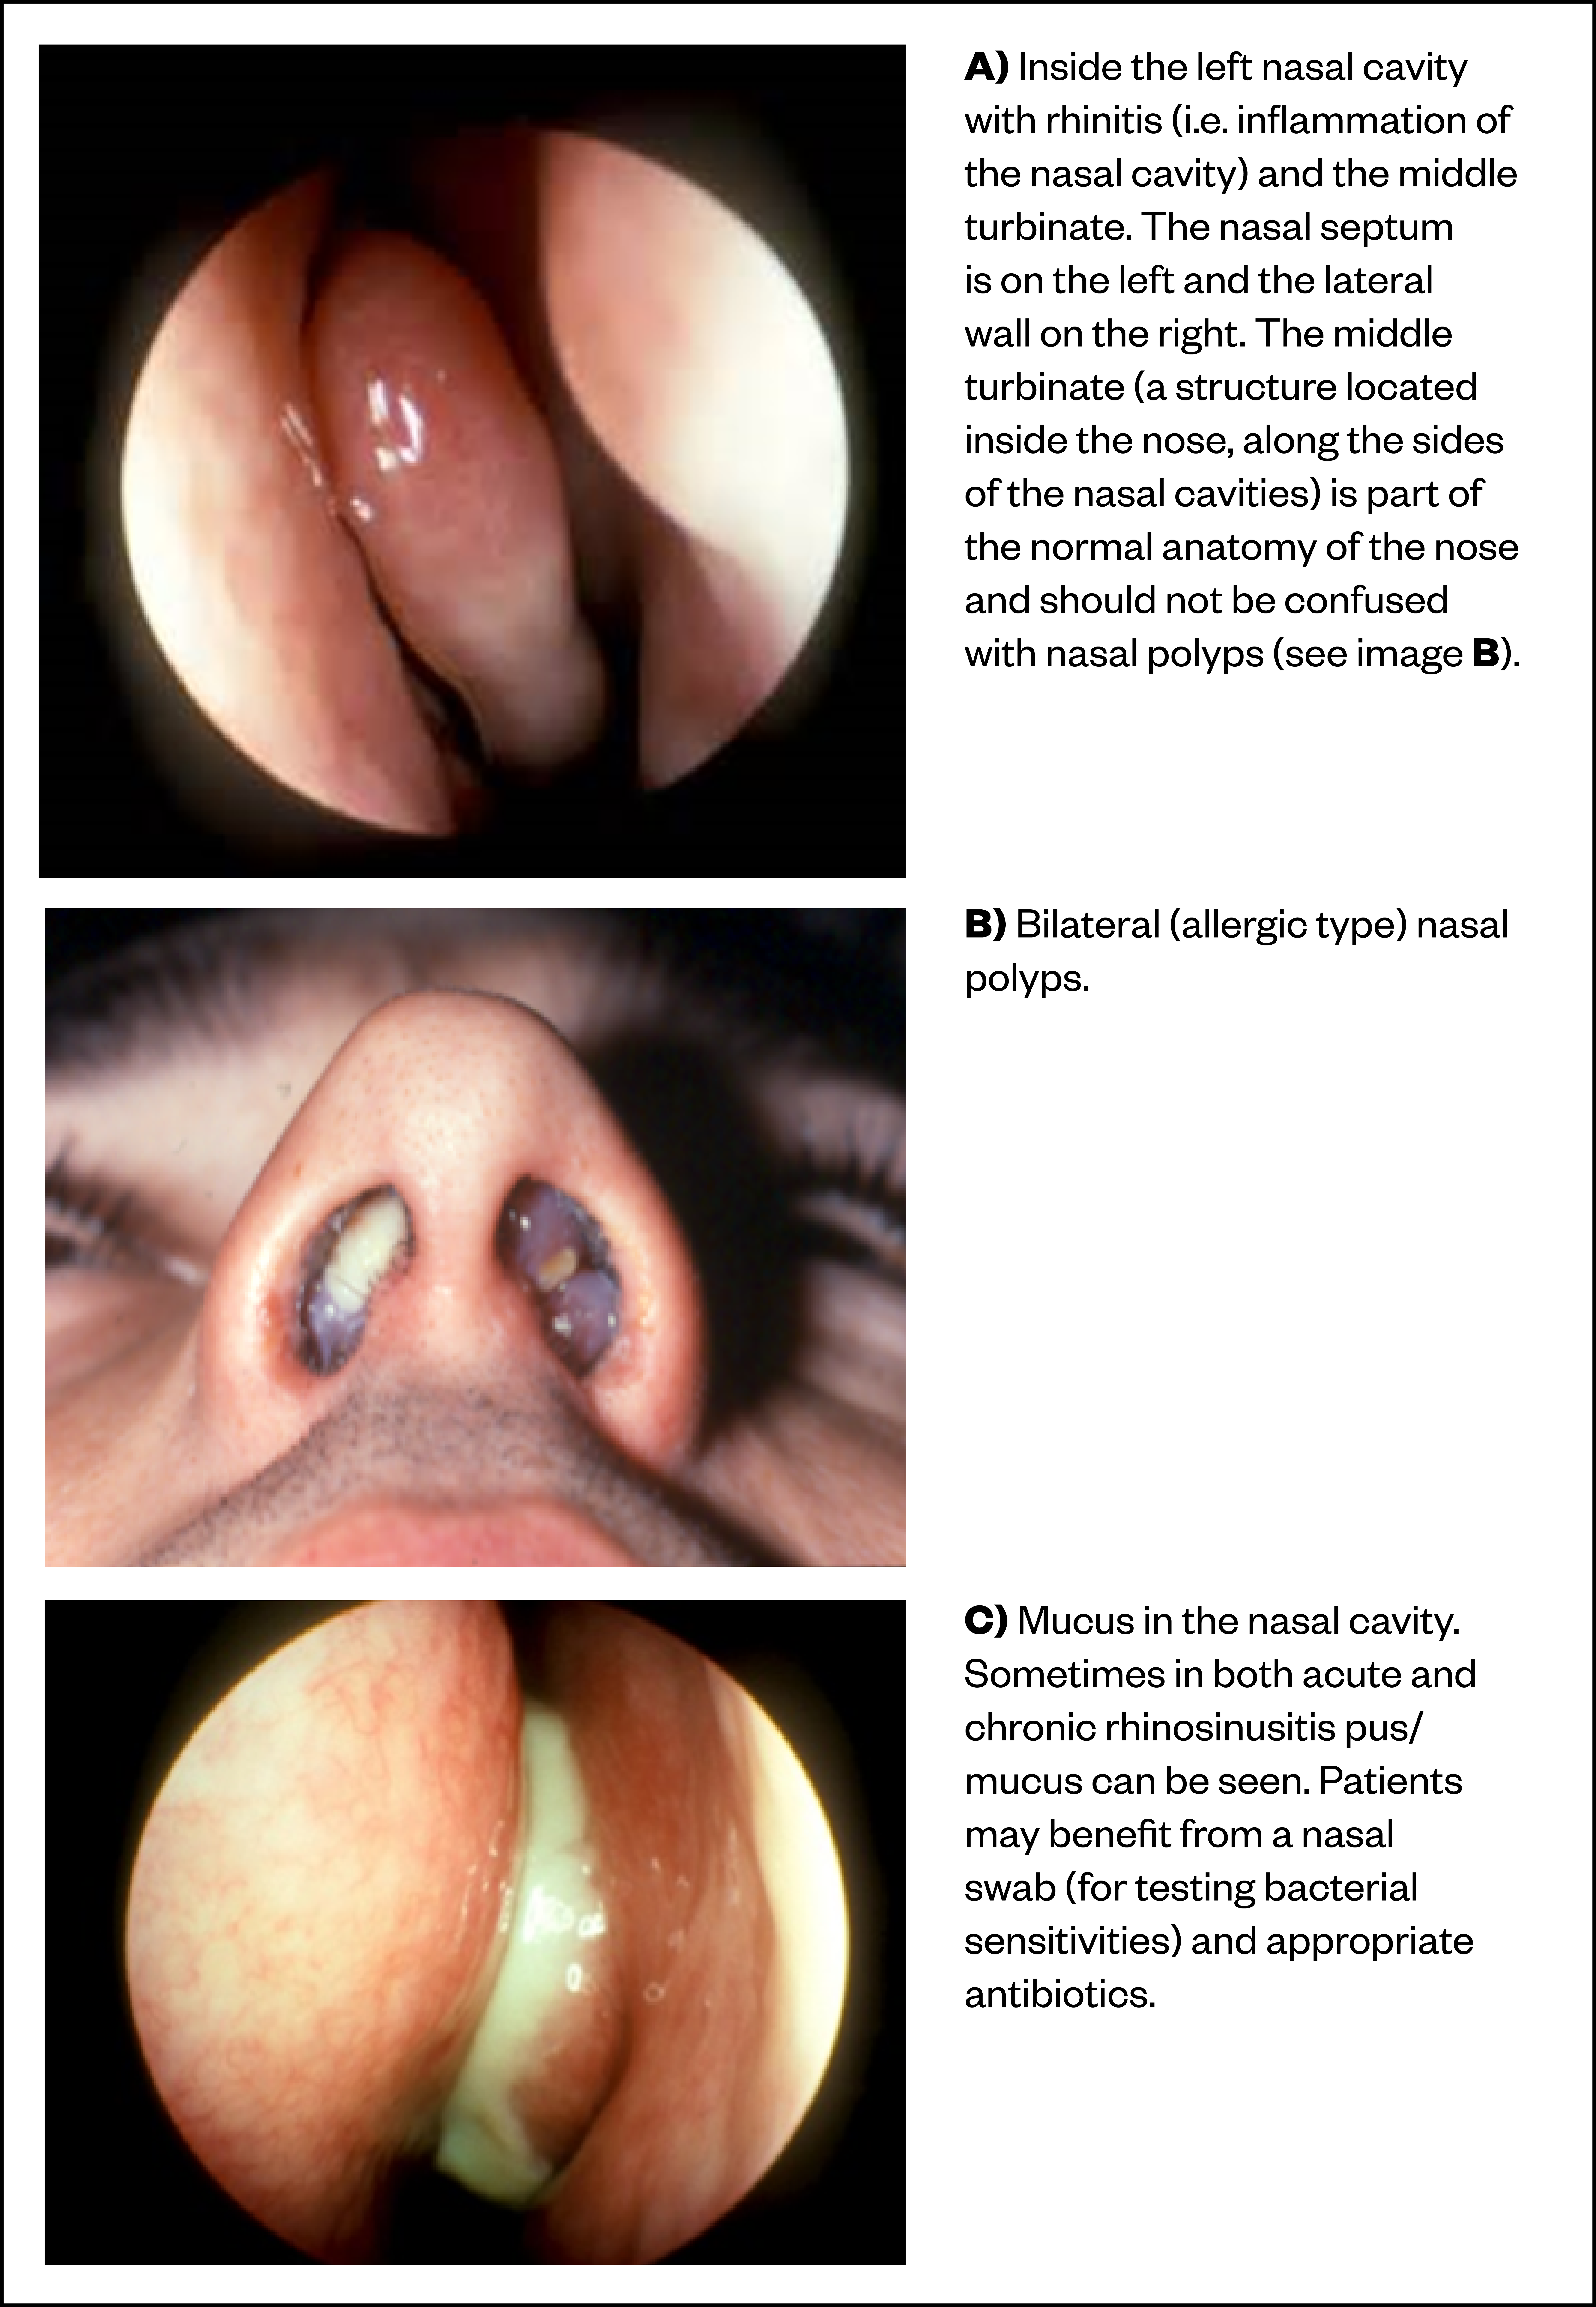 Photoguide A: nasal cavity with rhinitis. B: Bilateral nasal polyps. C: Mucus in the nasal cavity